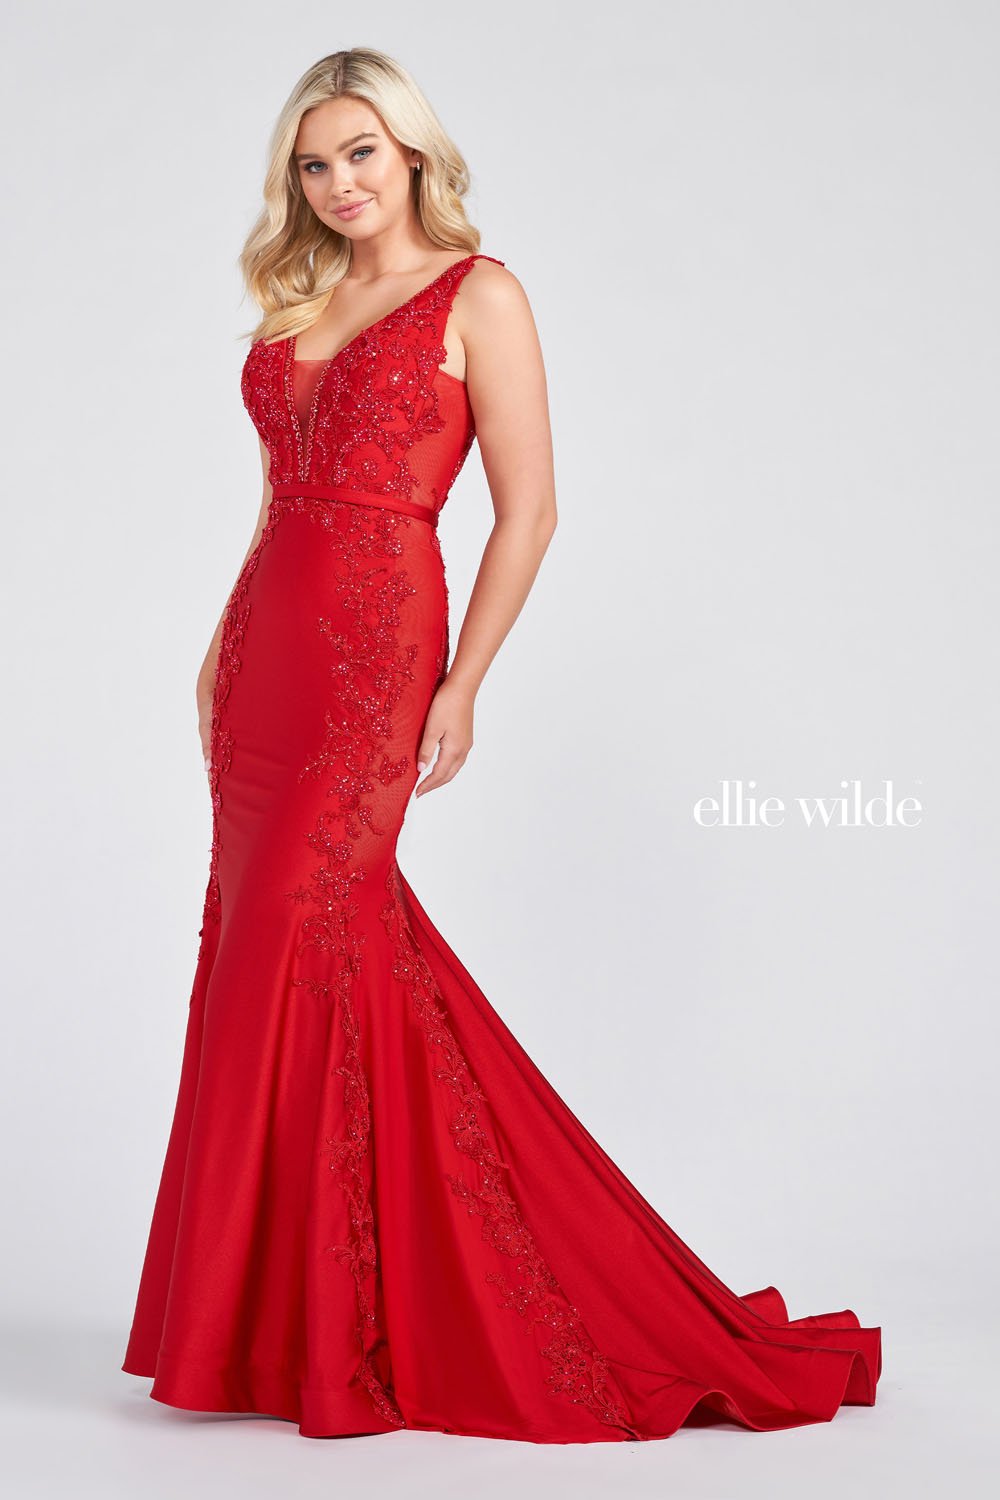 Ellie Wilde Ruby EW122075 Prom Dress Image.  Ruby formal dress.